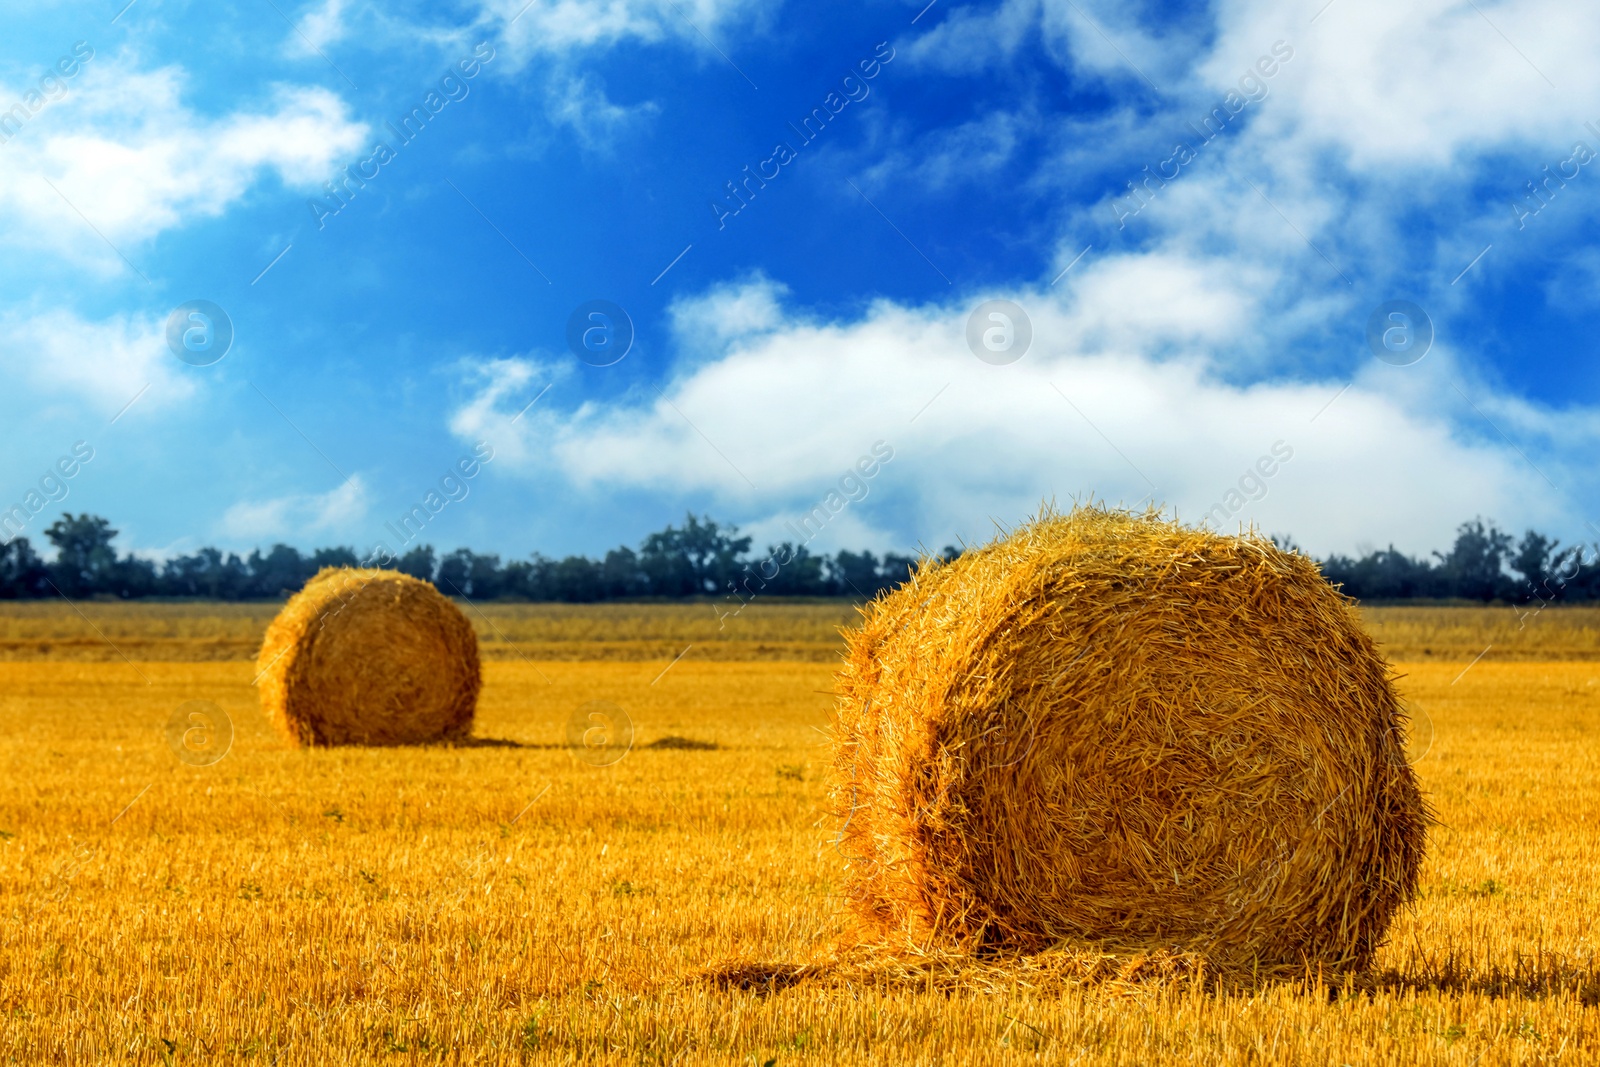 Image of Hay bales in golden field under blue sky